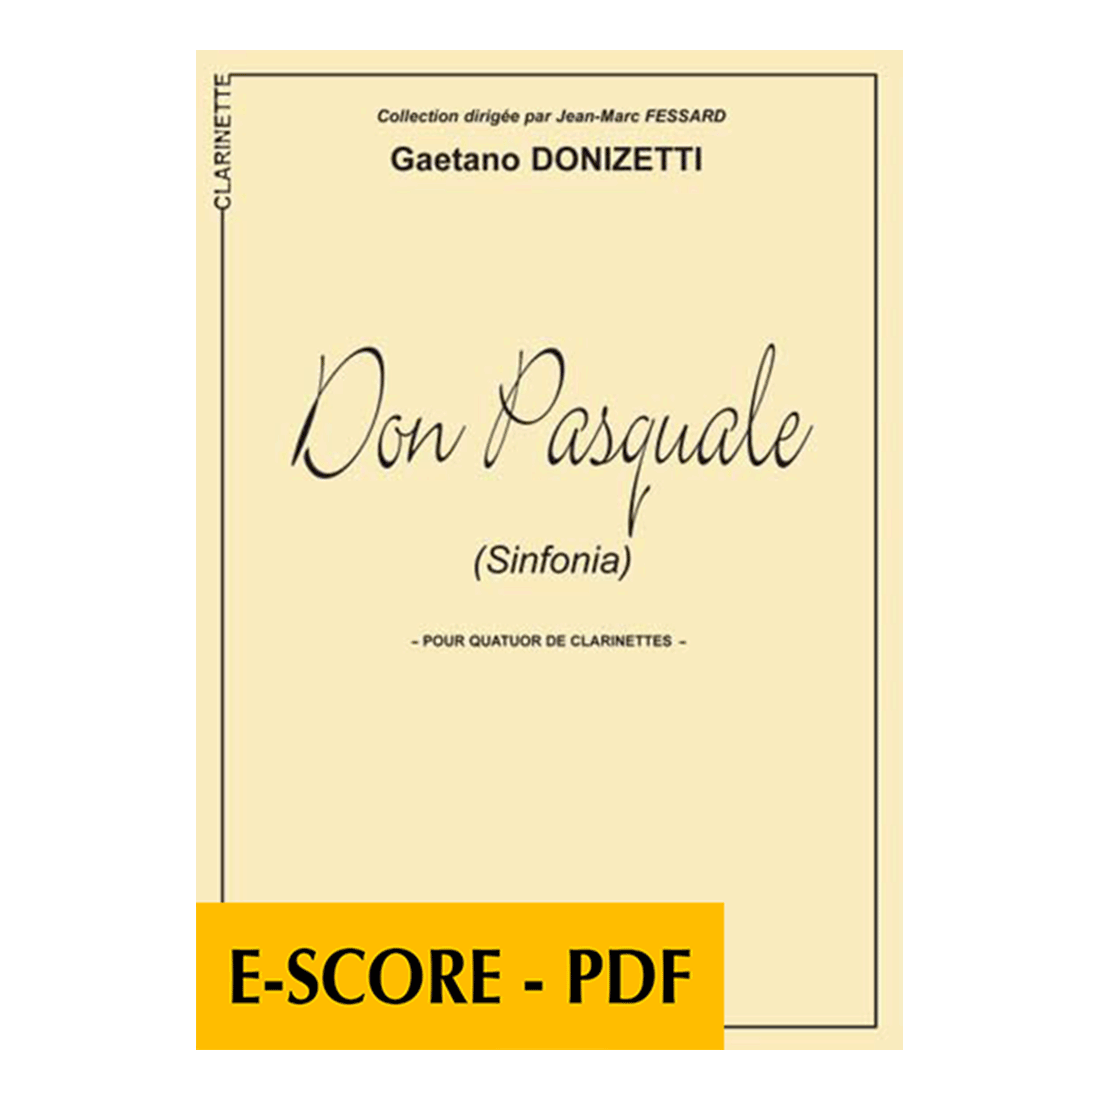 Don Pasquale (Sinfonia) for clarinet quartet - E-score PDF